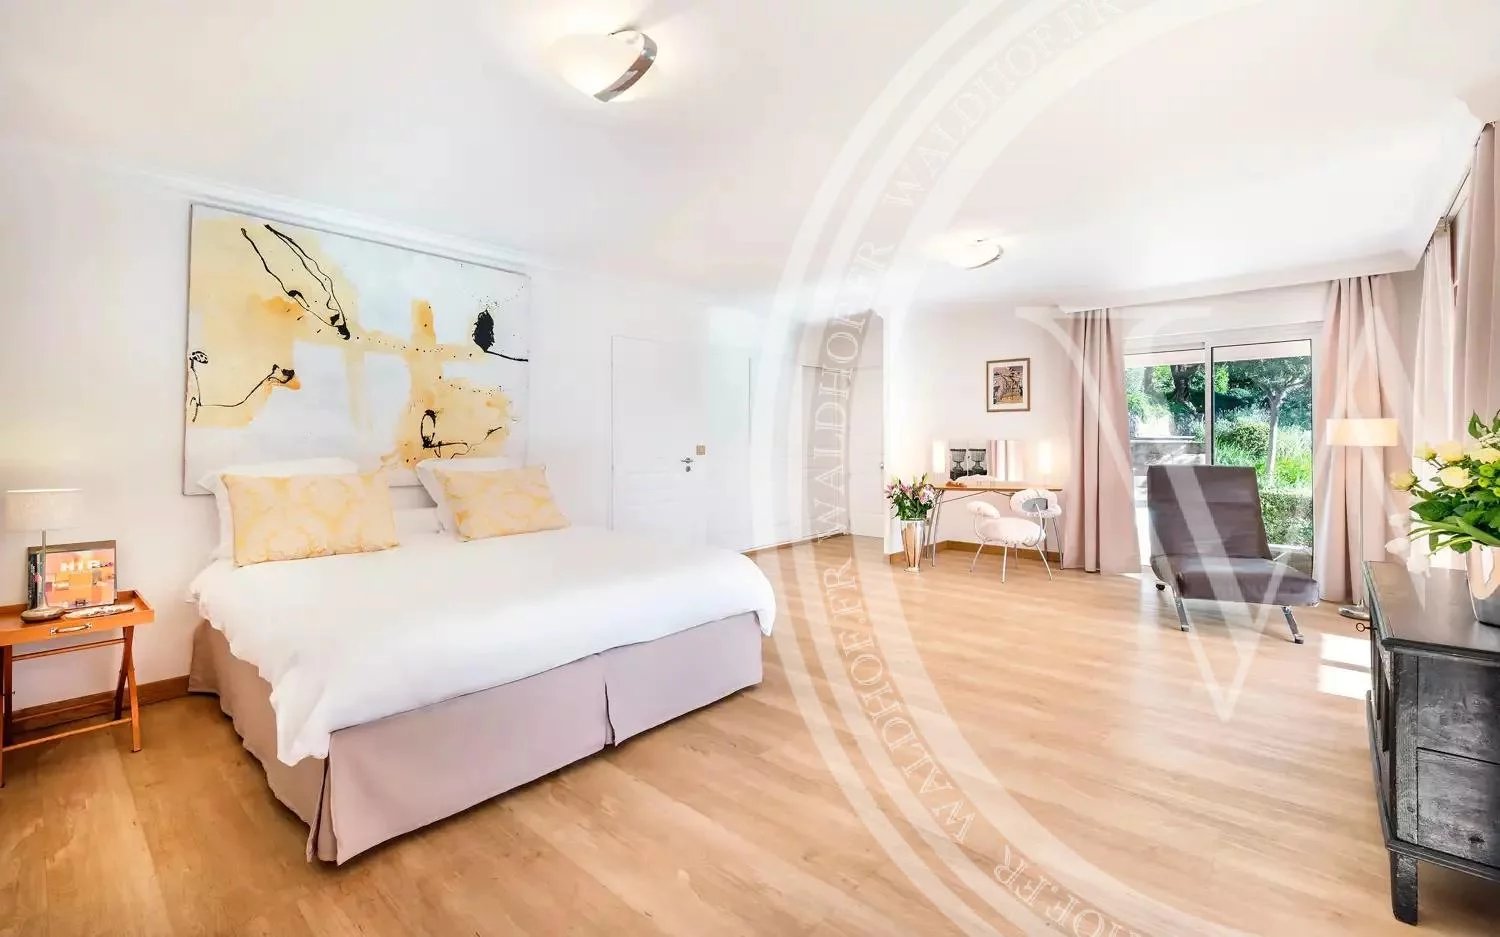 7 bedroom villa - Absolute luxury on the border of Monaco